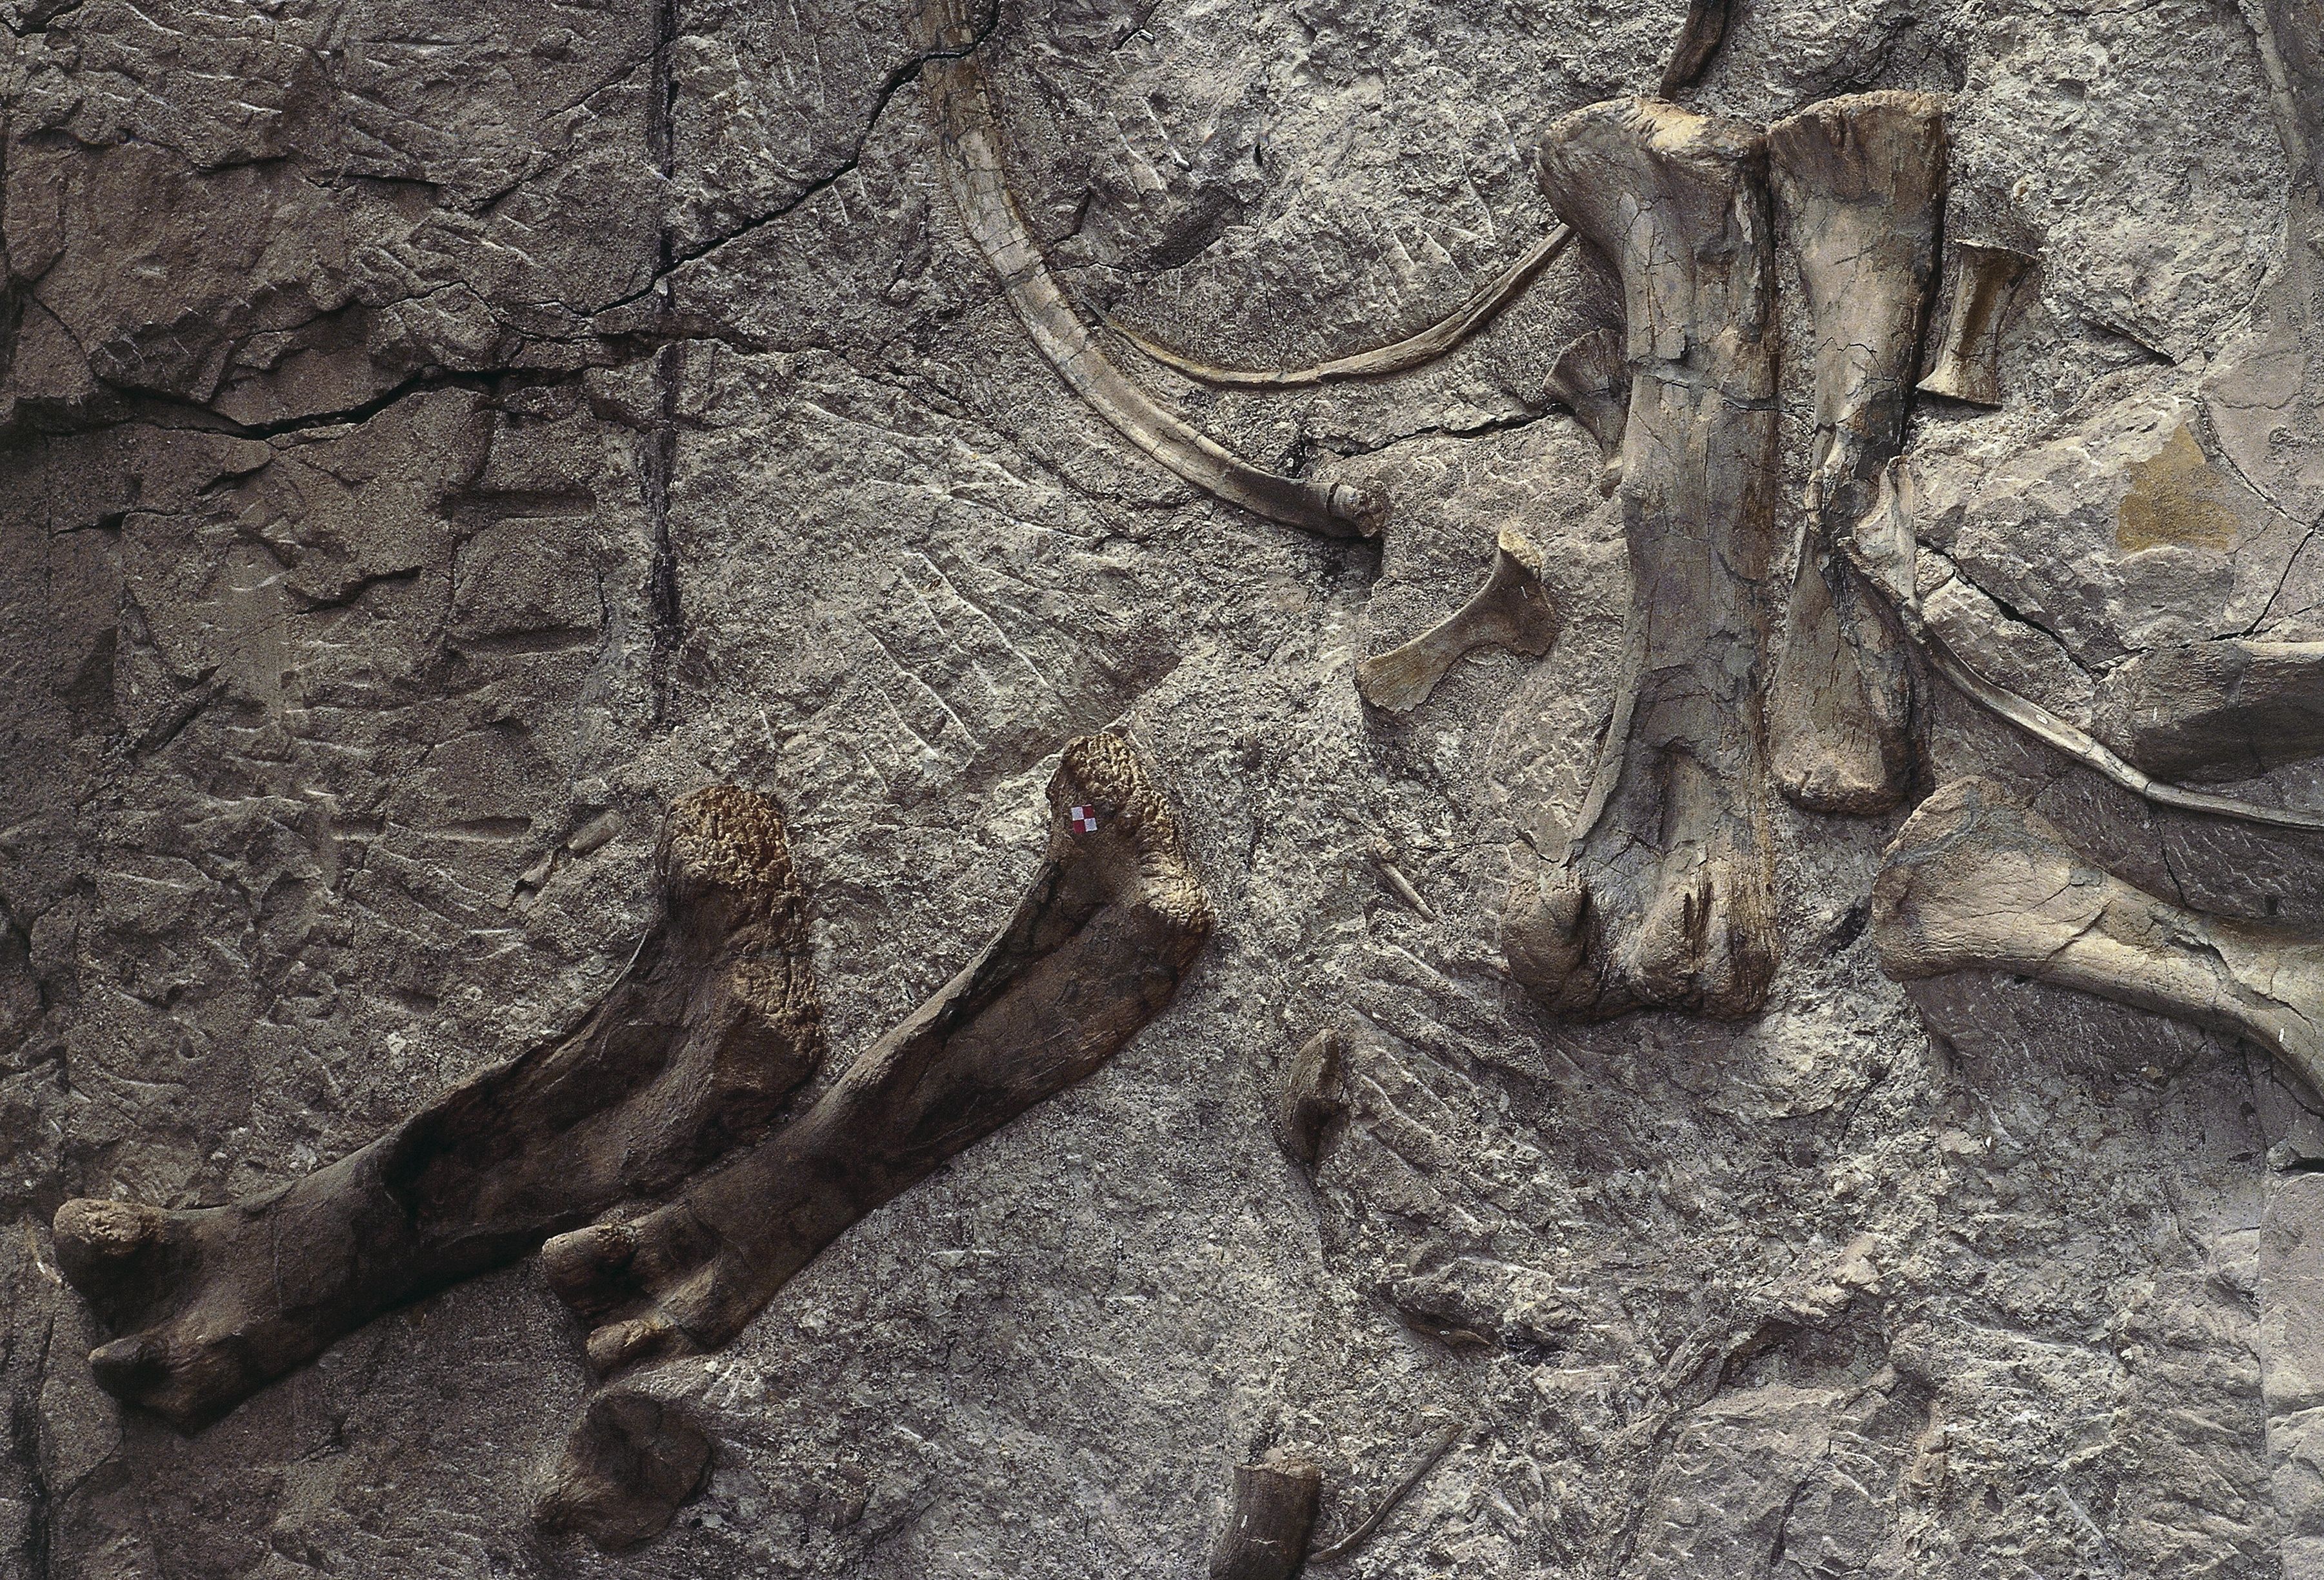 Dinosaur fossils in a rock wall.